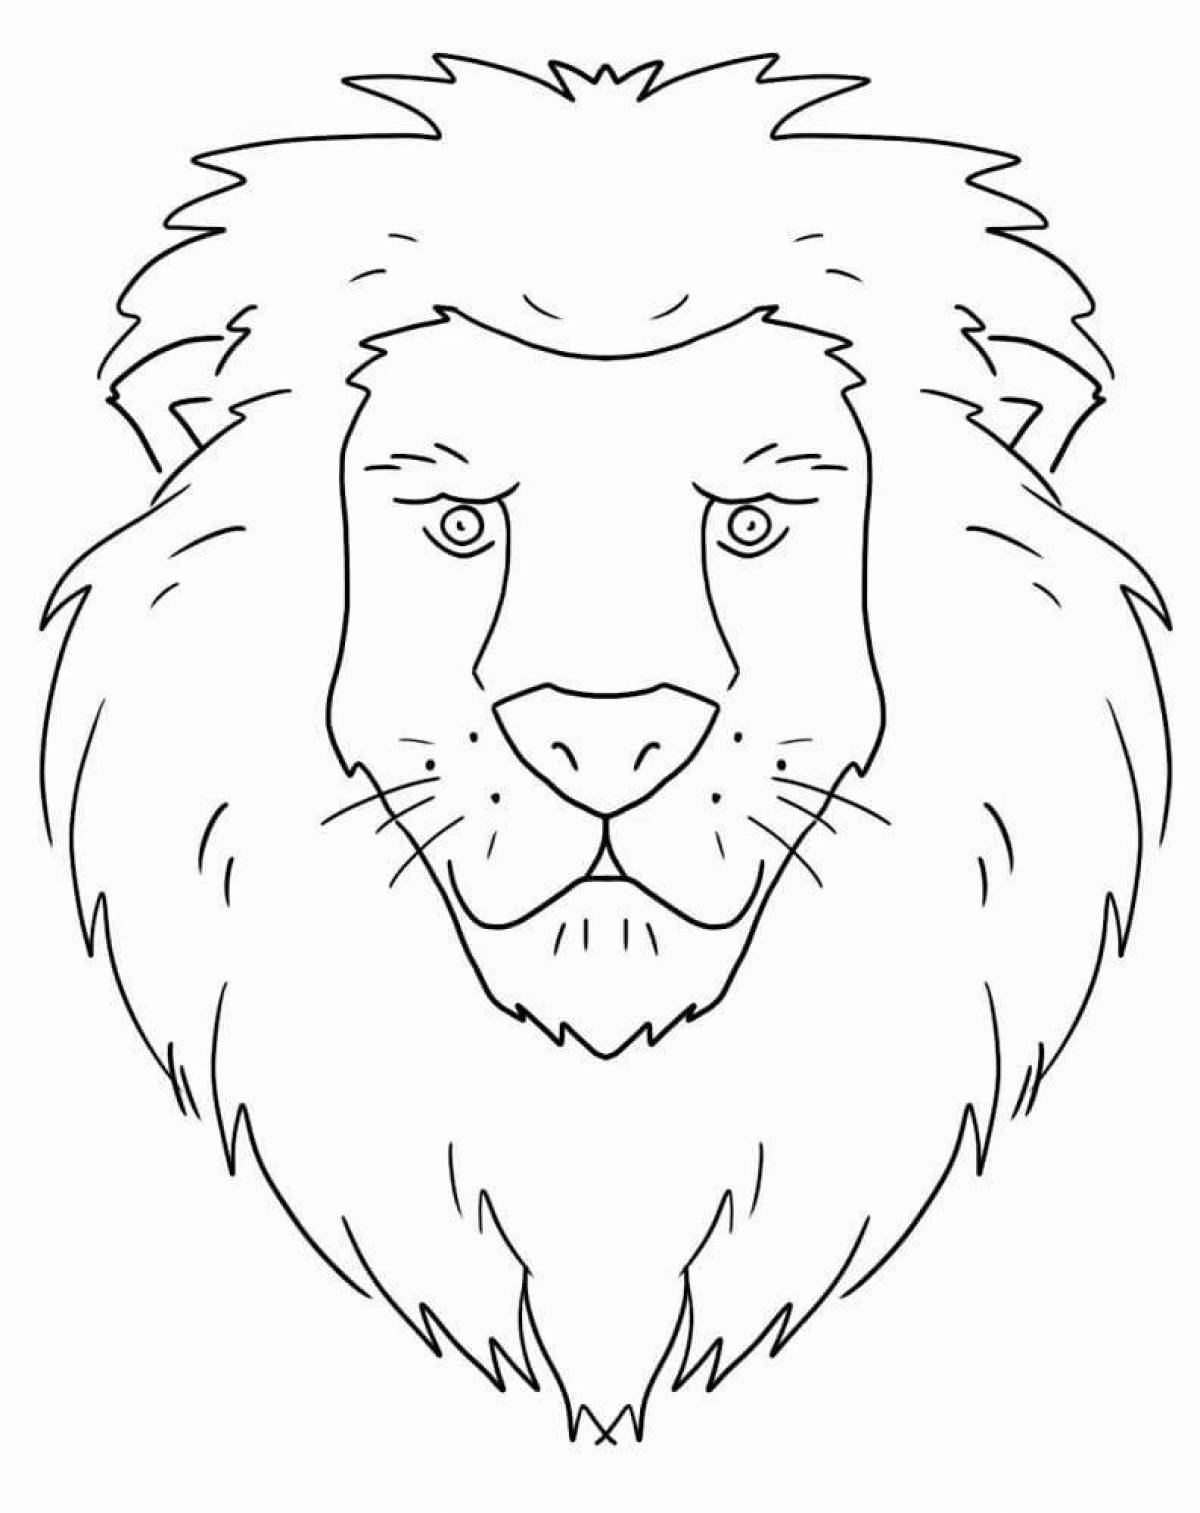 Coloring page gorgeous lion head